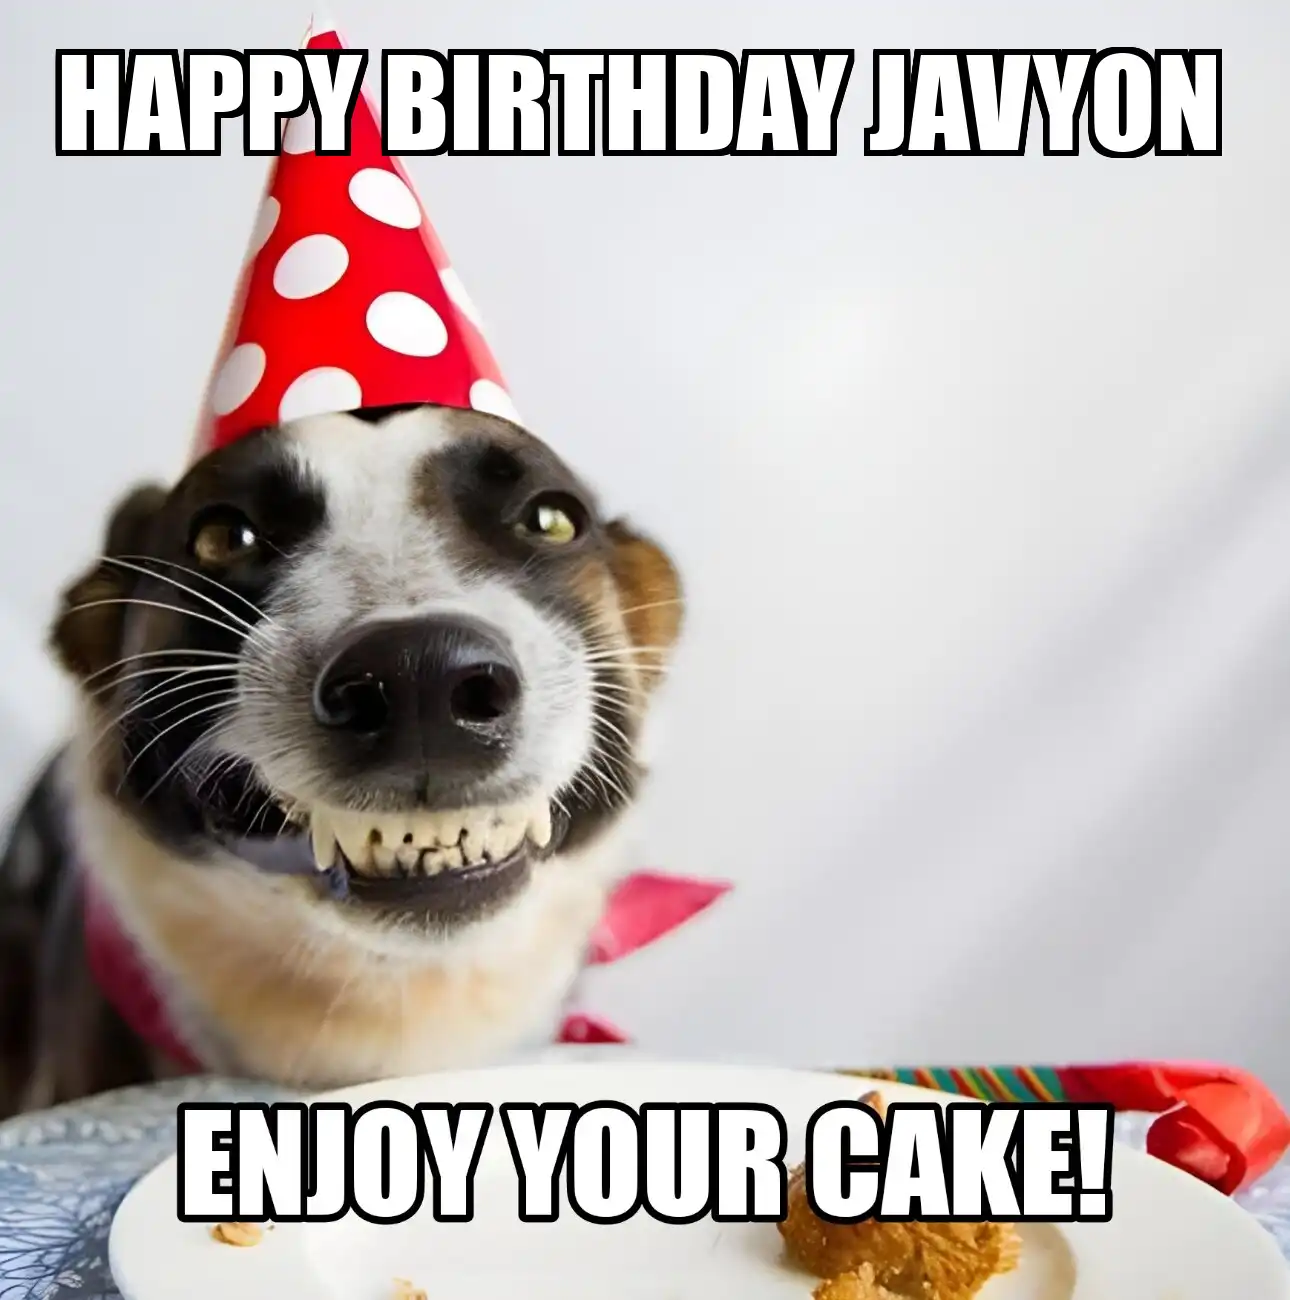 Happy Birthday Javyon Enjoy Your Cake Dog Meme